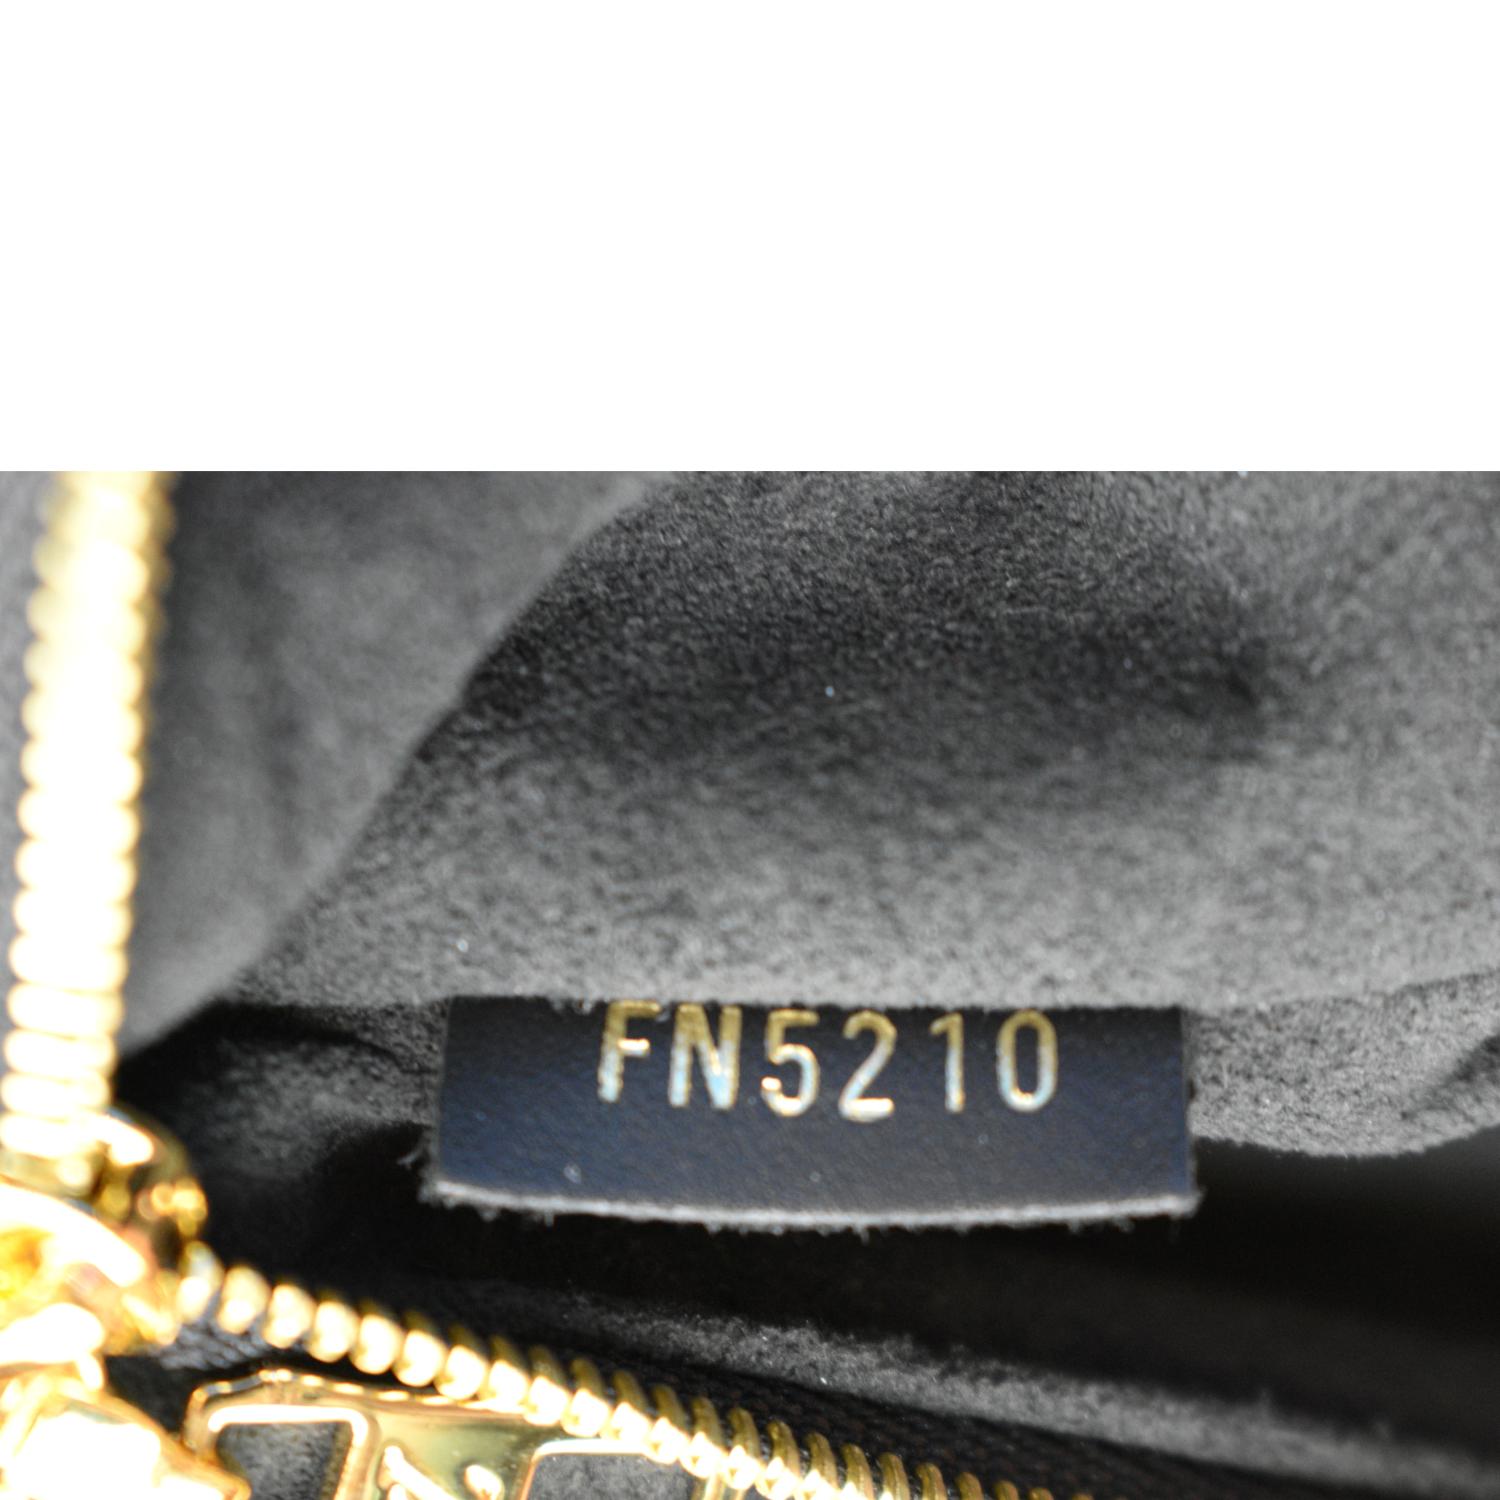 Vavin leather handbag Louis Vuitton Brown in Leather - 32680348